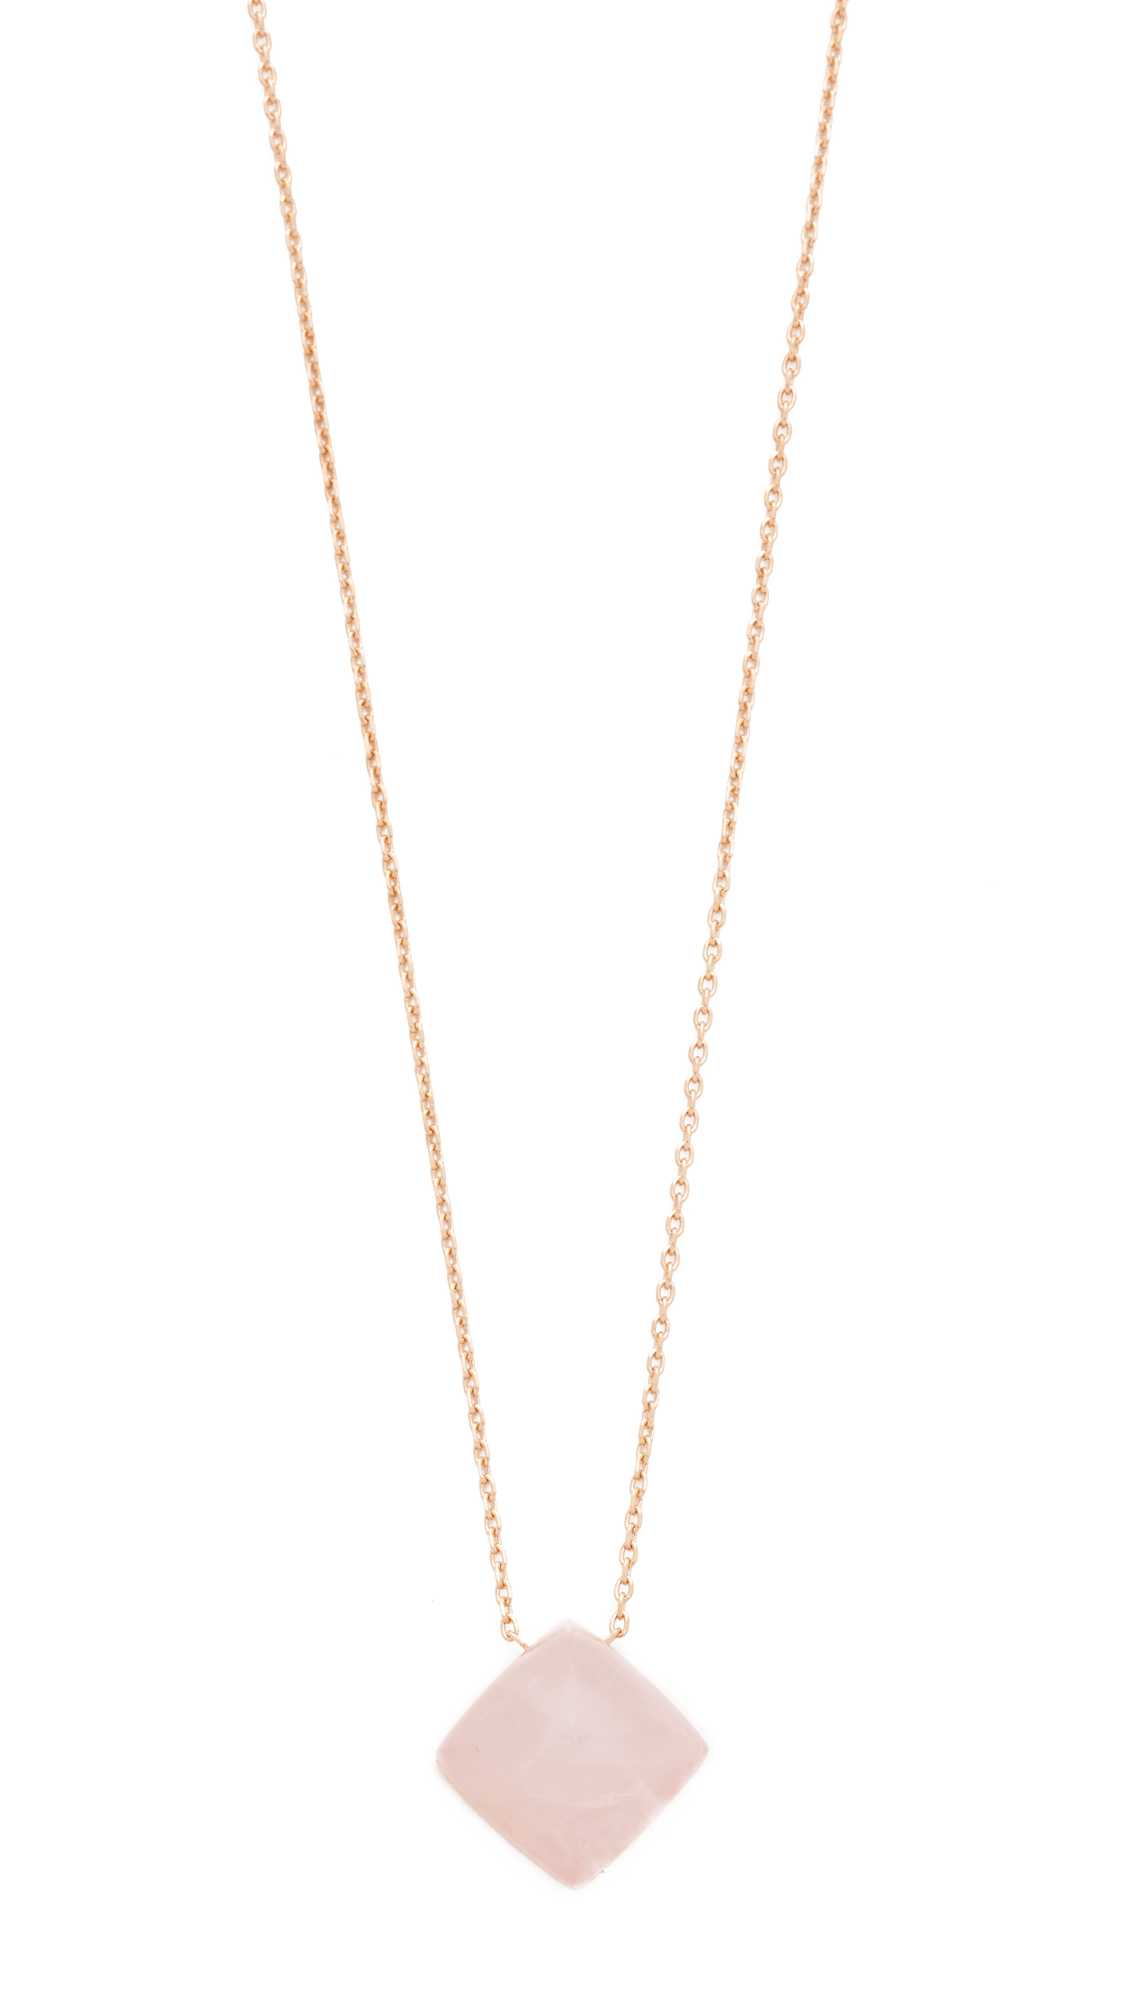 Michael Kors Rose Quartz Pyramid Pendant Necklace in Pink | Lyst